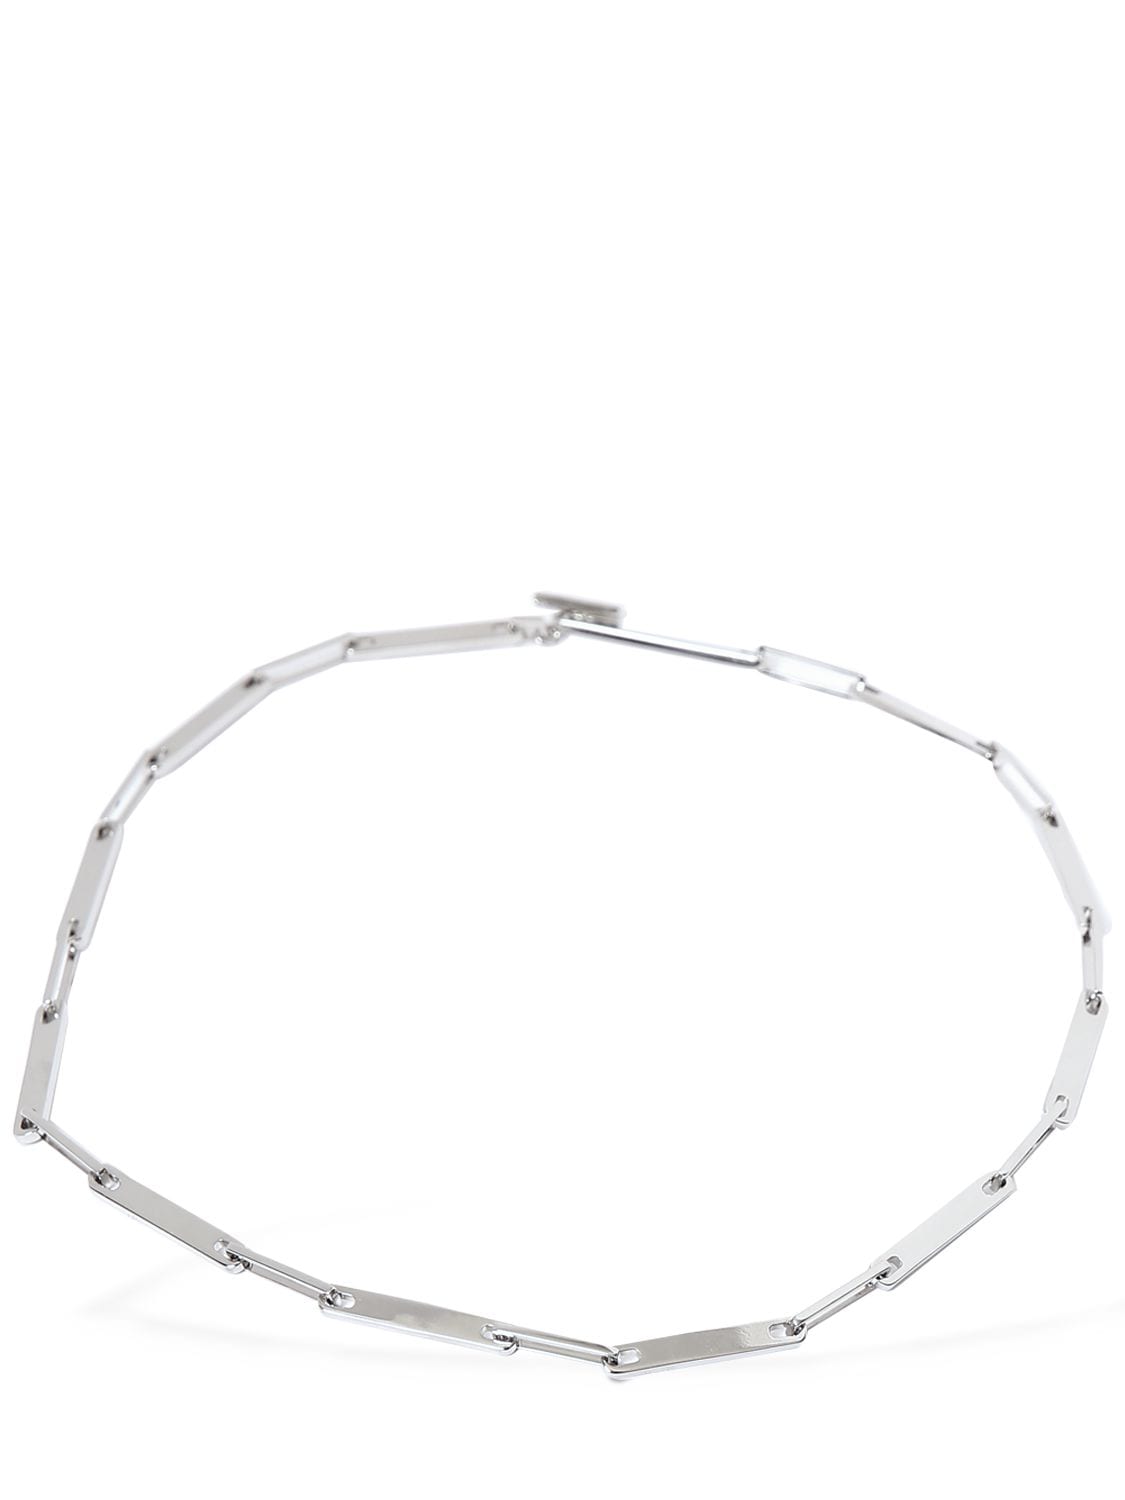 Saint Laurent Brass Chain Necklace In Silver